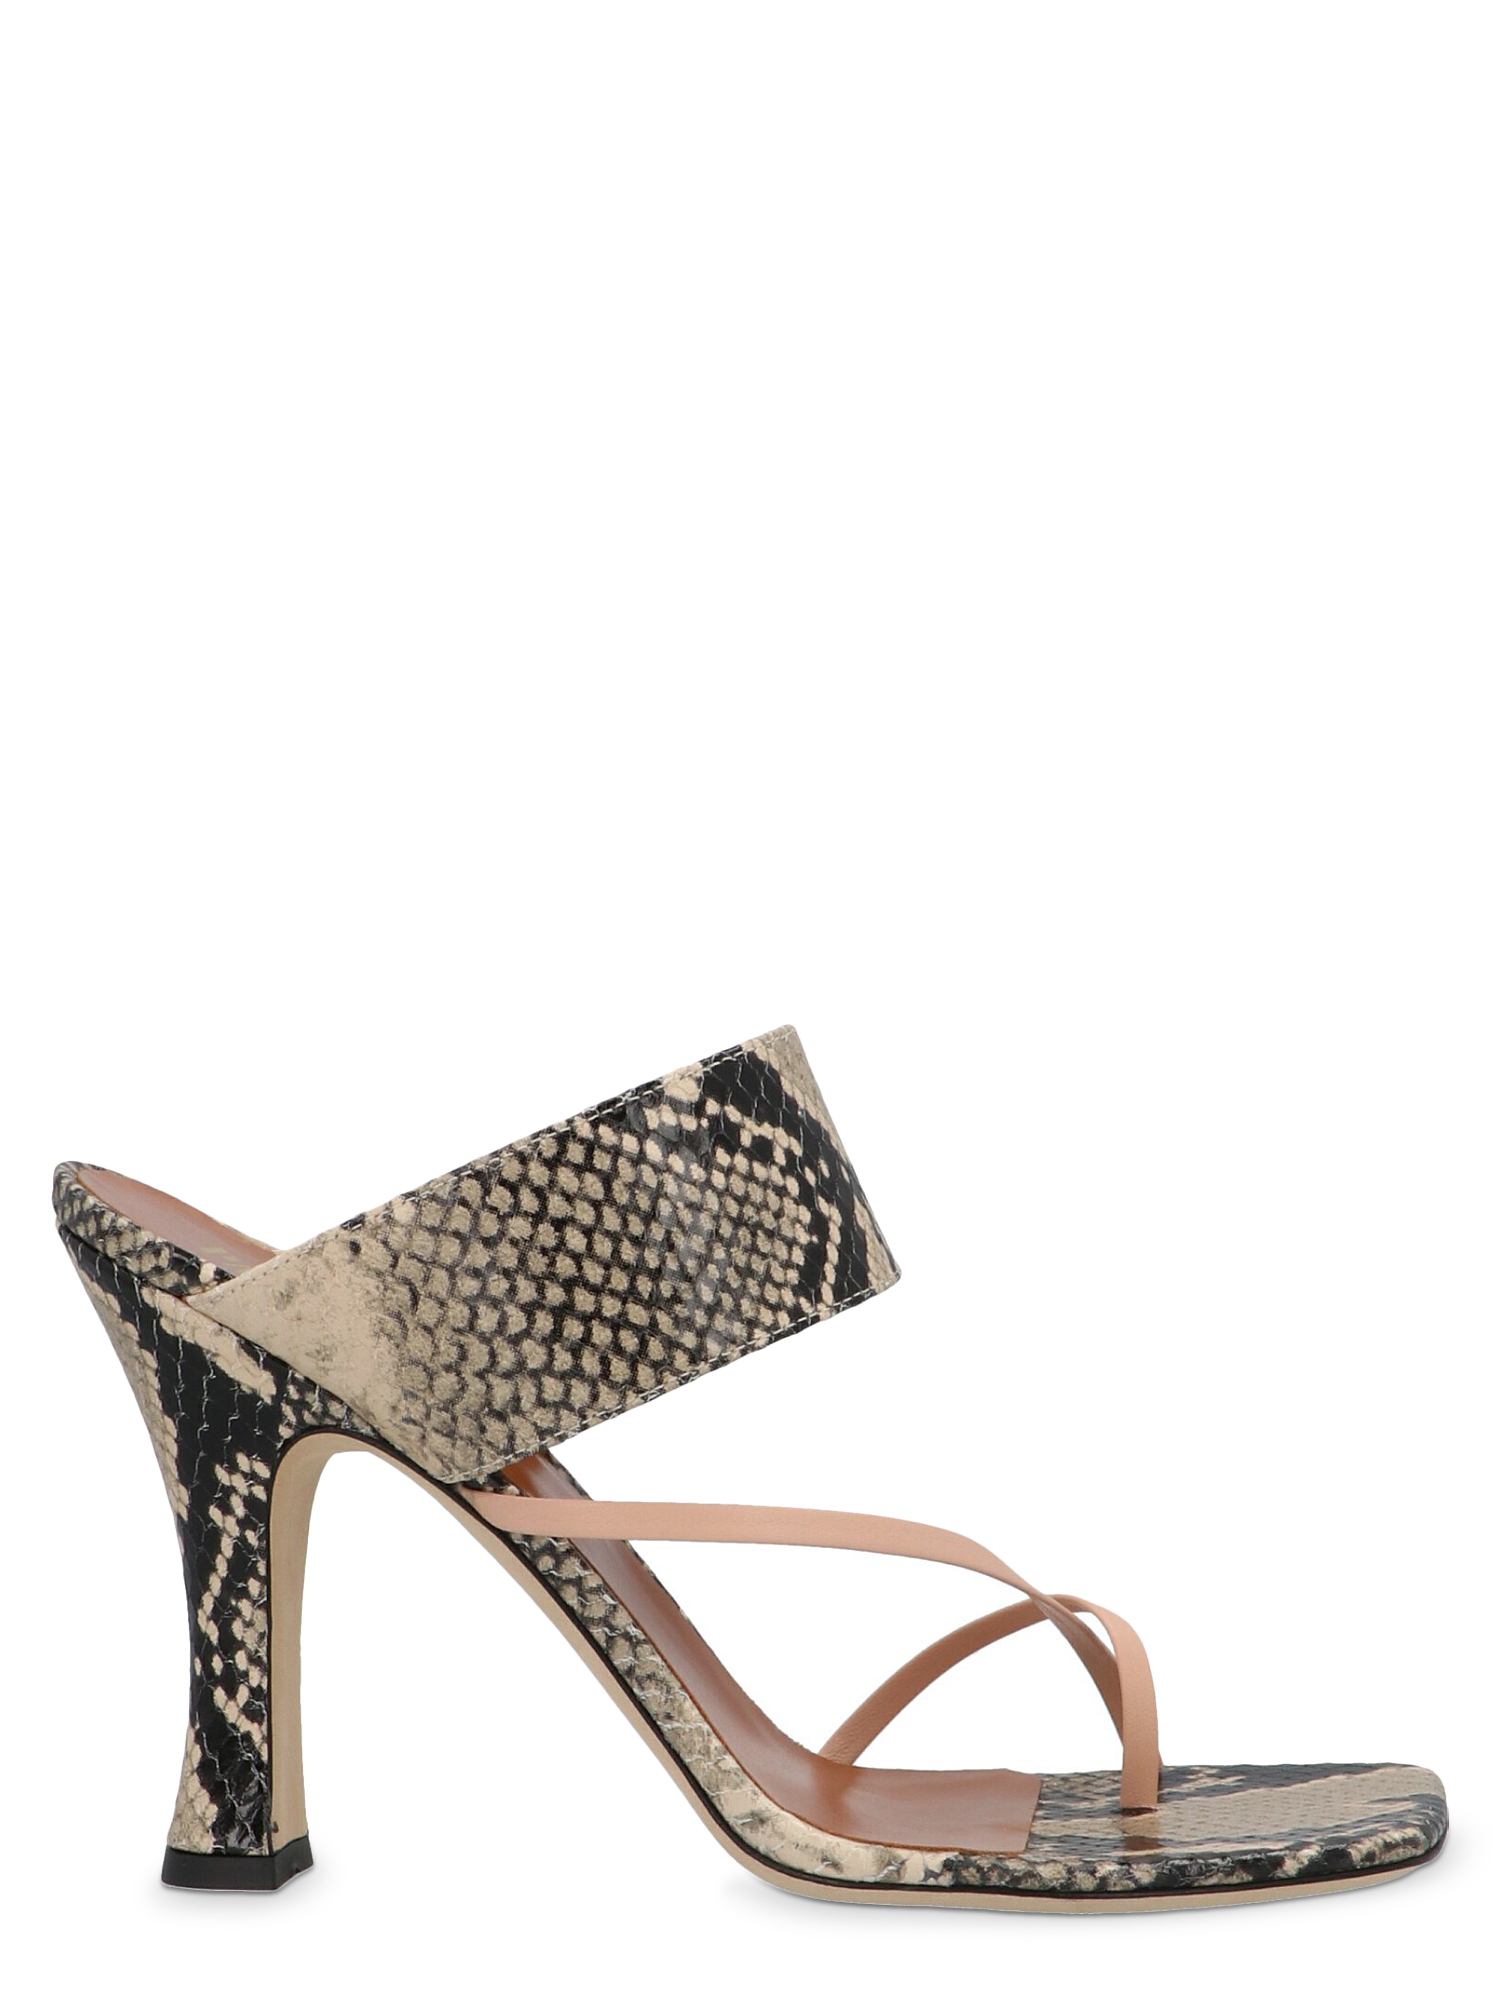 PARIS TEXAS Sandals for Women | ModeSens